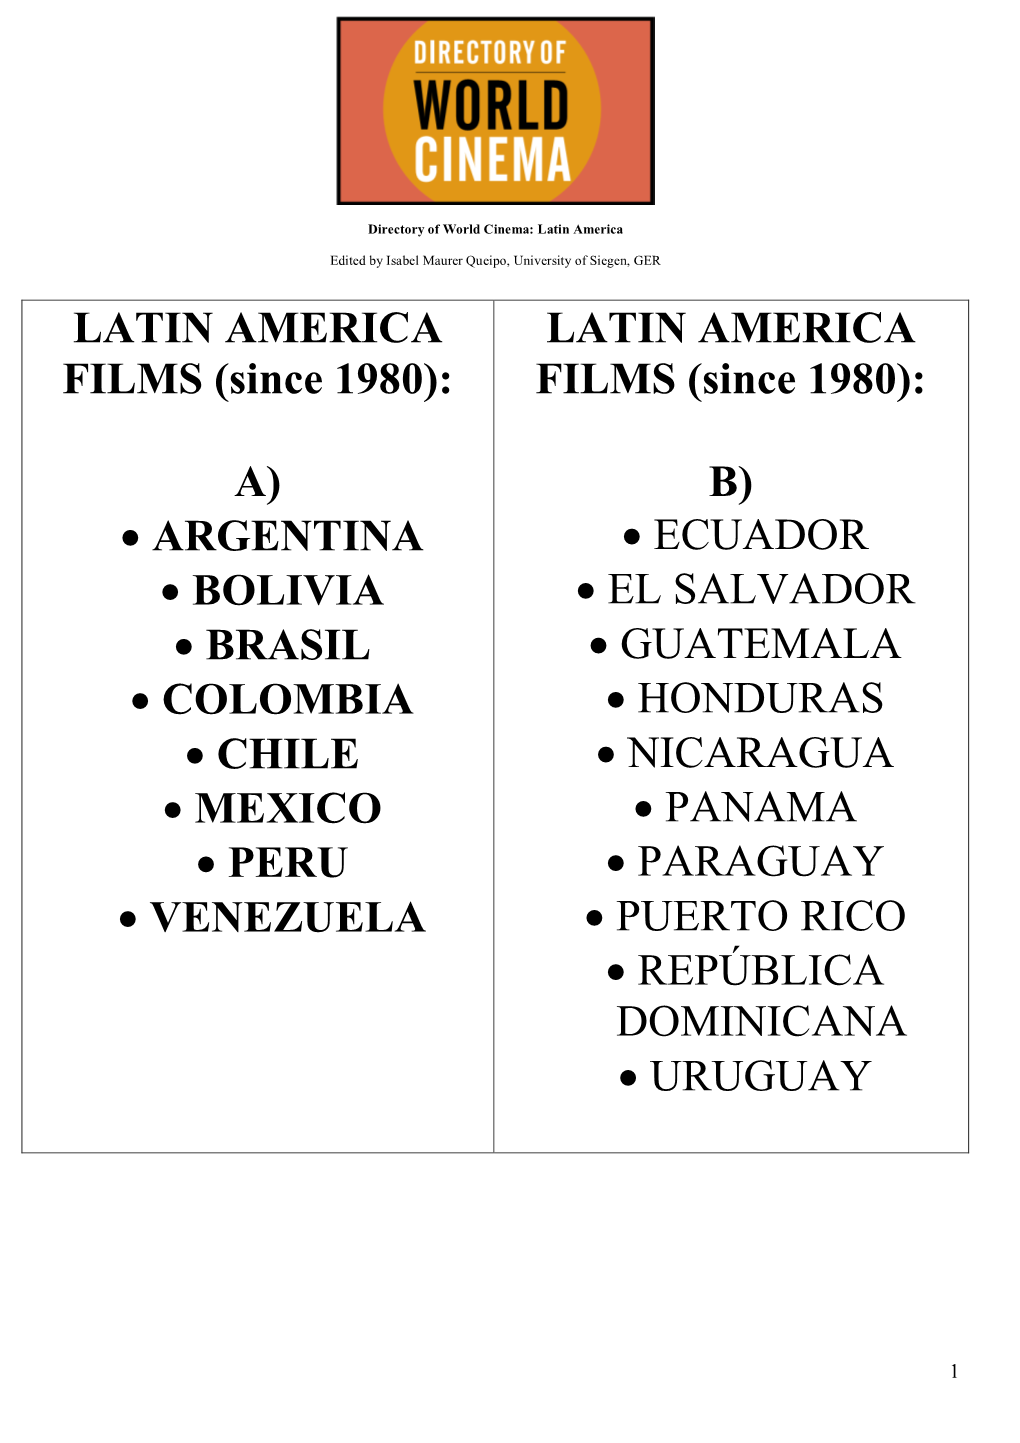 Cine Latinoamericano Filmliste 1980